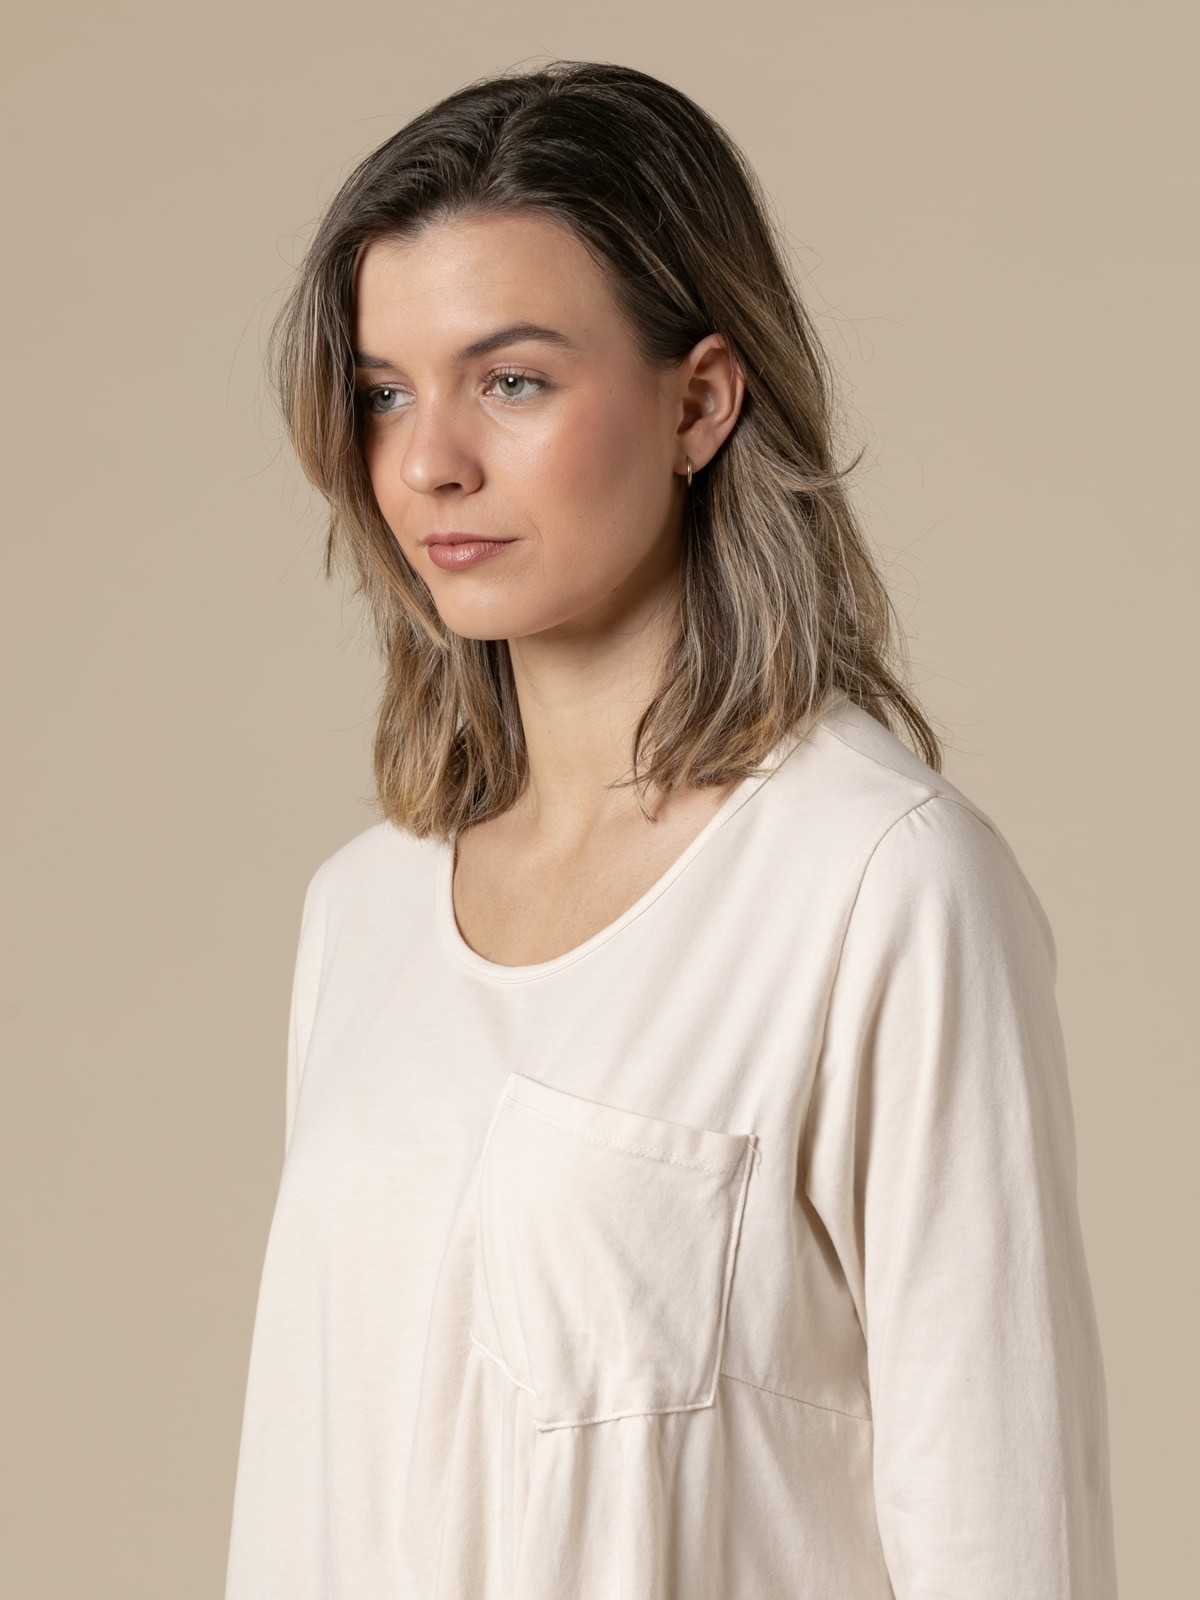 Woman 100% cotton t-shirt with pocket design, mom fit  Crudocolour